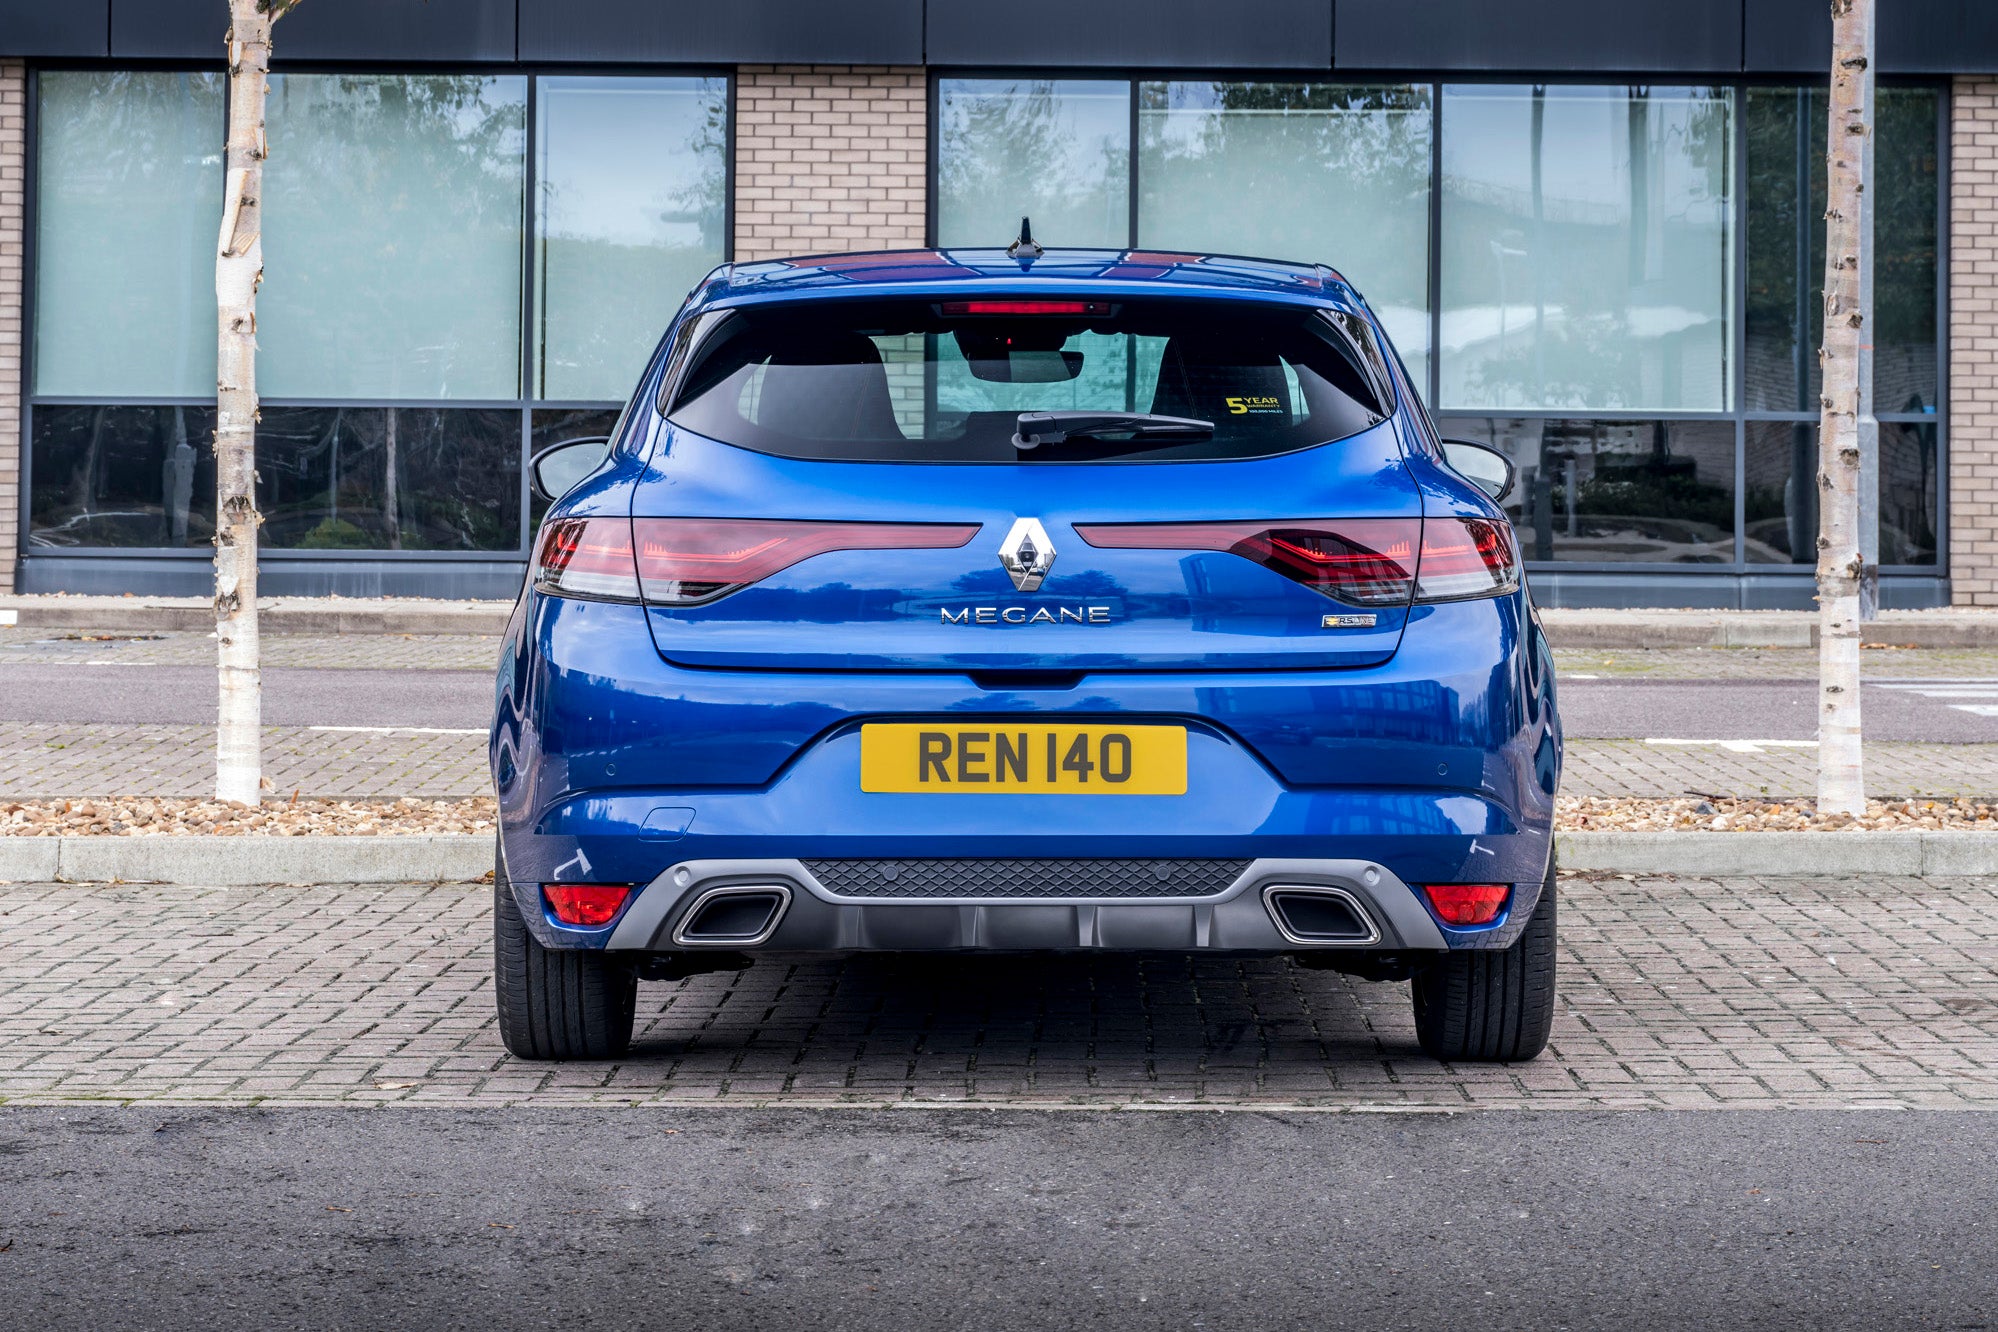 Renault Megane review 2021: rear blue